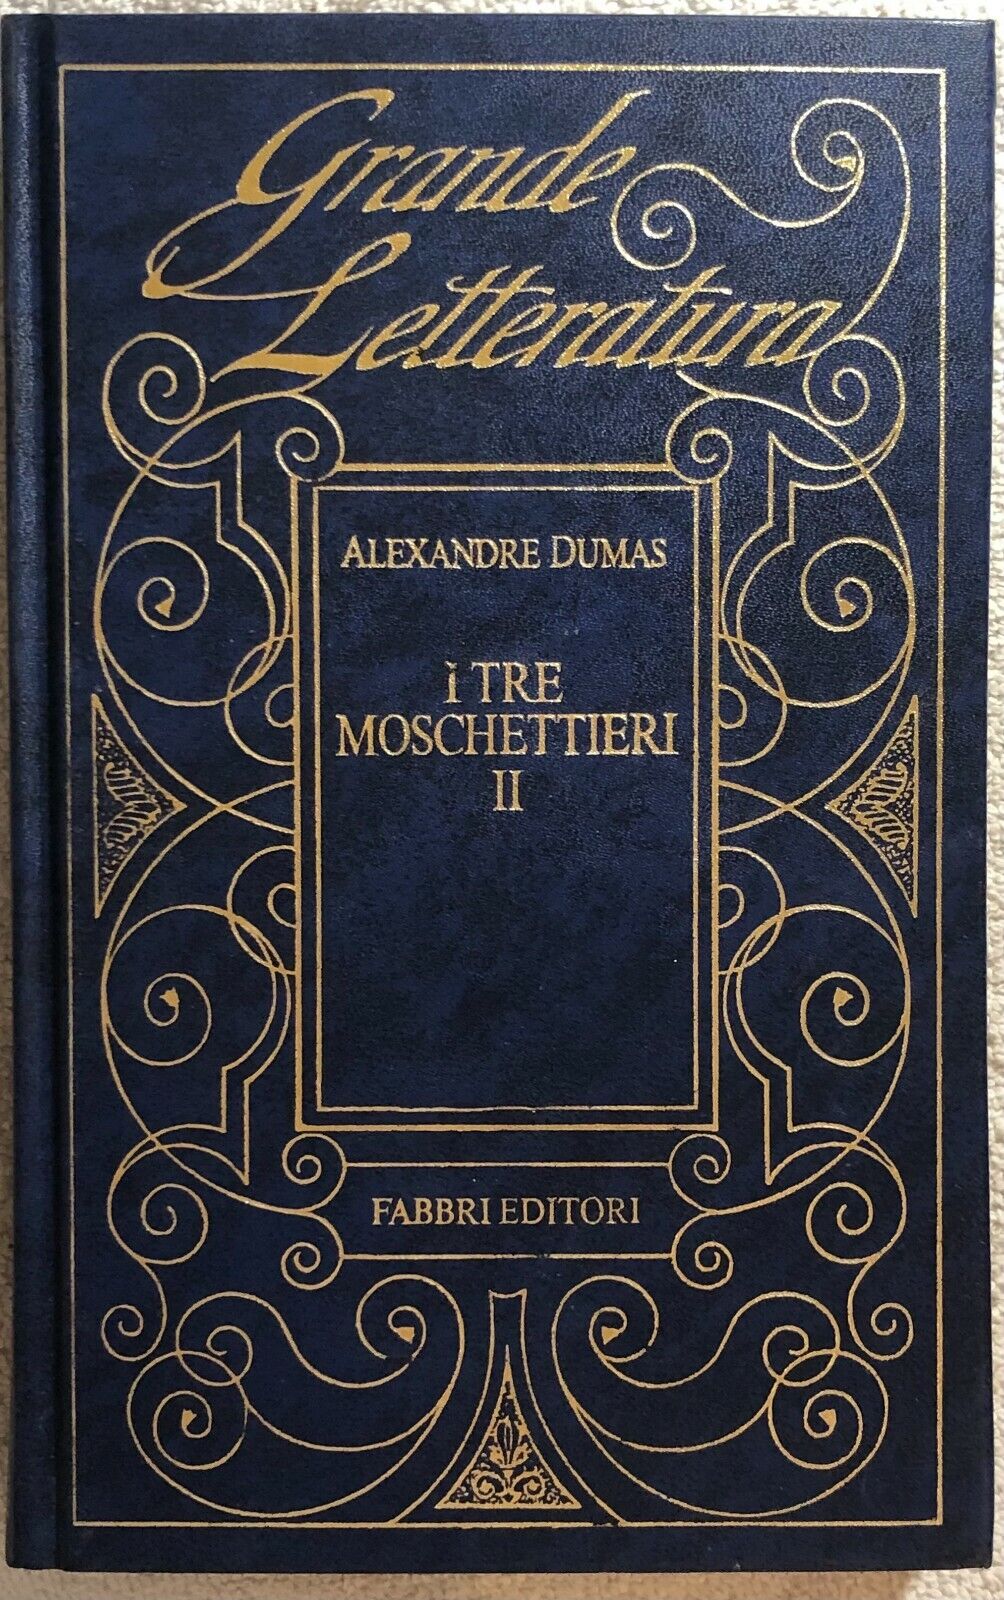 I tre moschettieri II di Alexandre Dumas,  1993,  Fabbri Editori